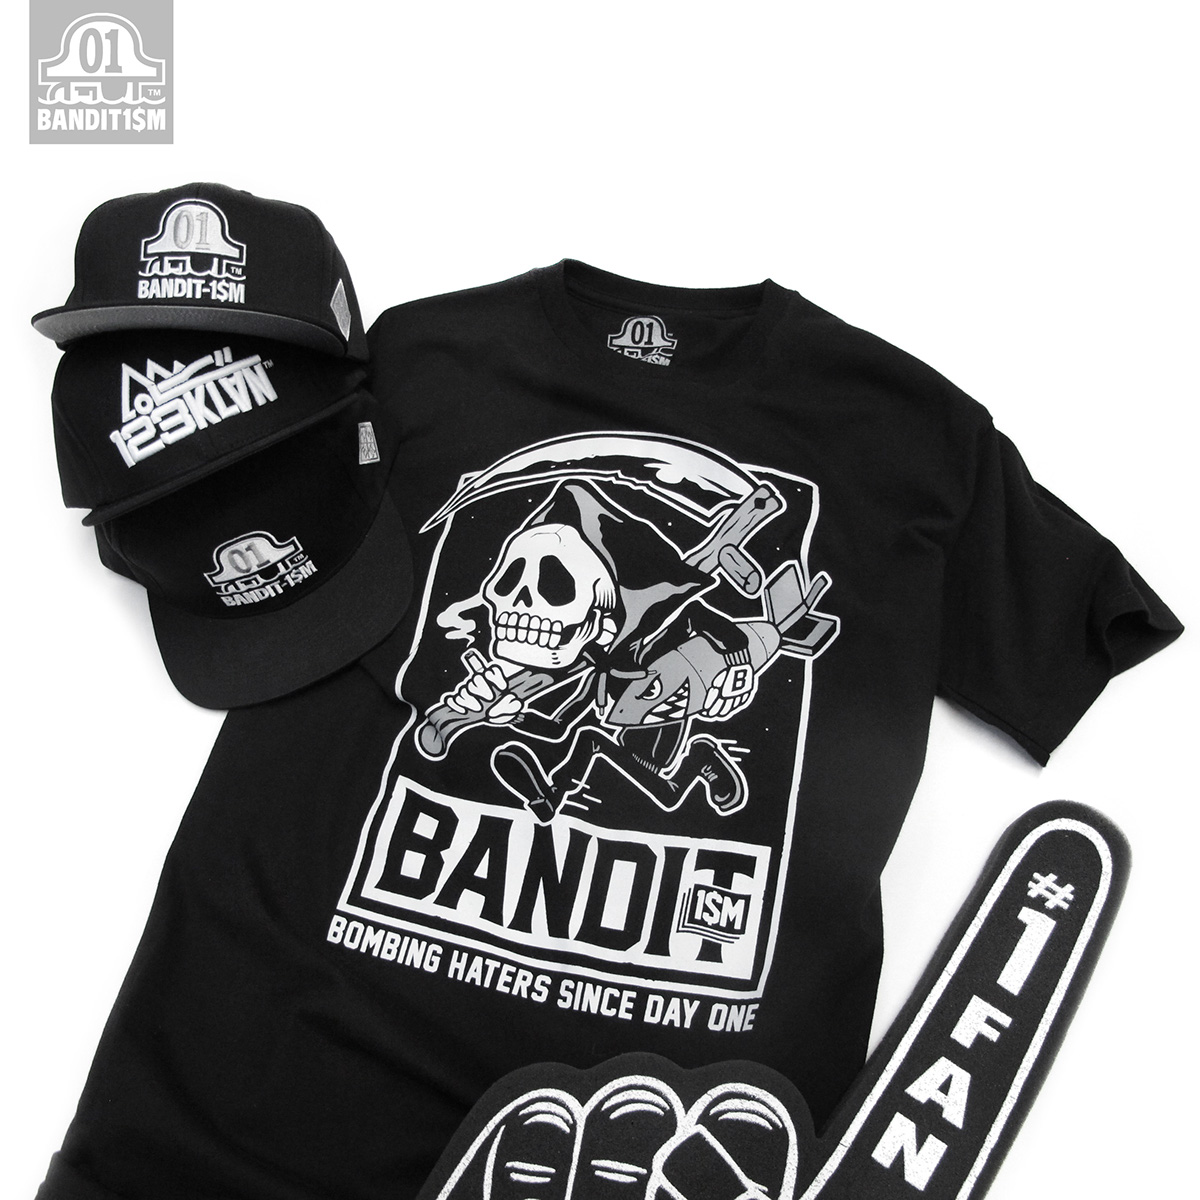 123klan bandit1sm Montreal streetwear Mascot teeshirt snapback crewneck hoodies